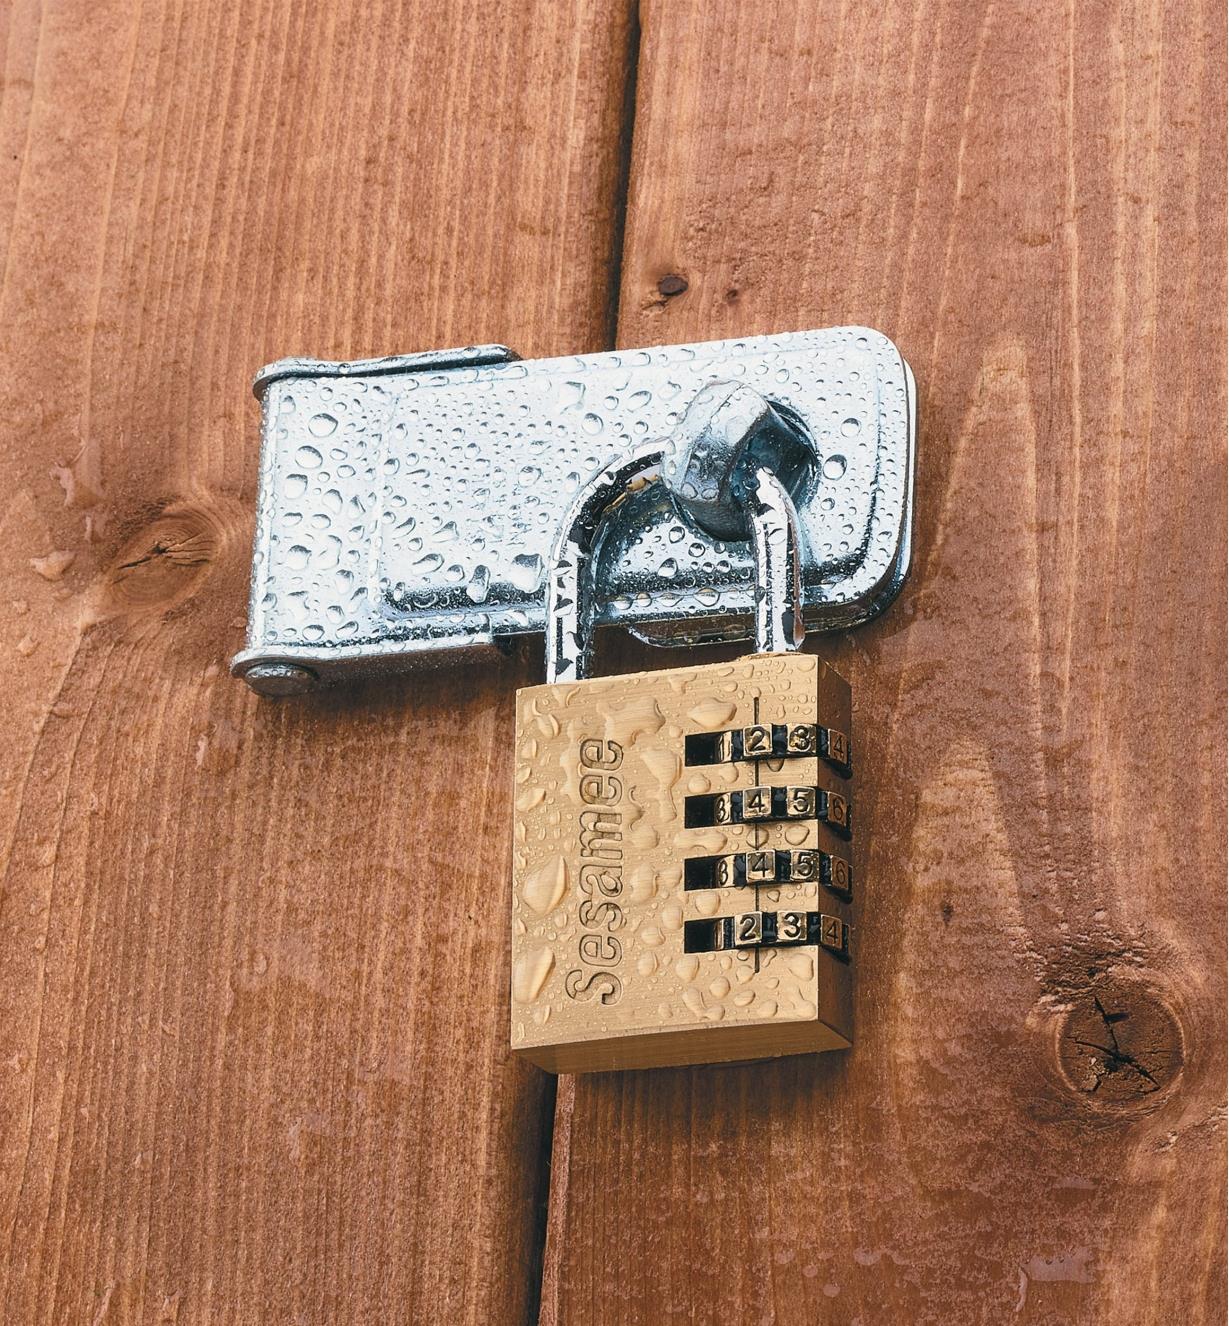 Door hasp secured with a 2 9/16" x 1 3/16" padlock